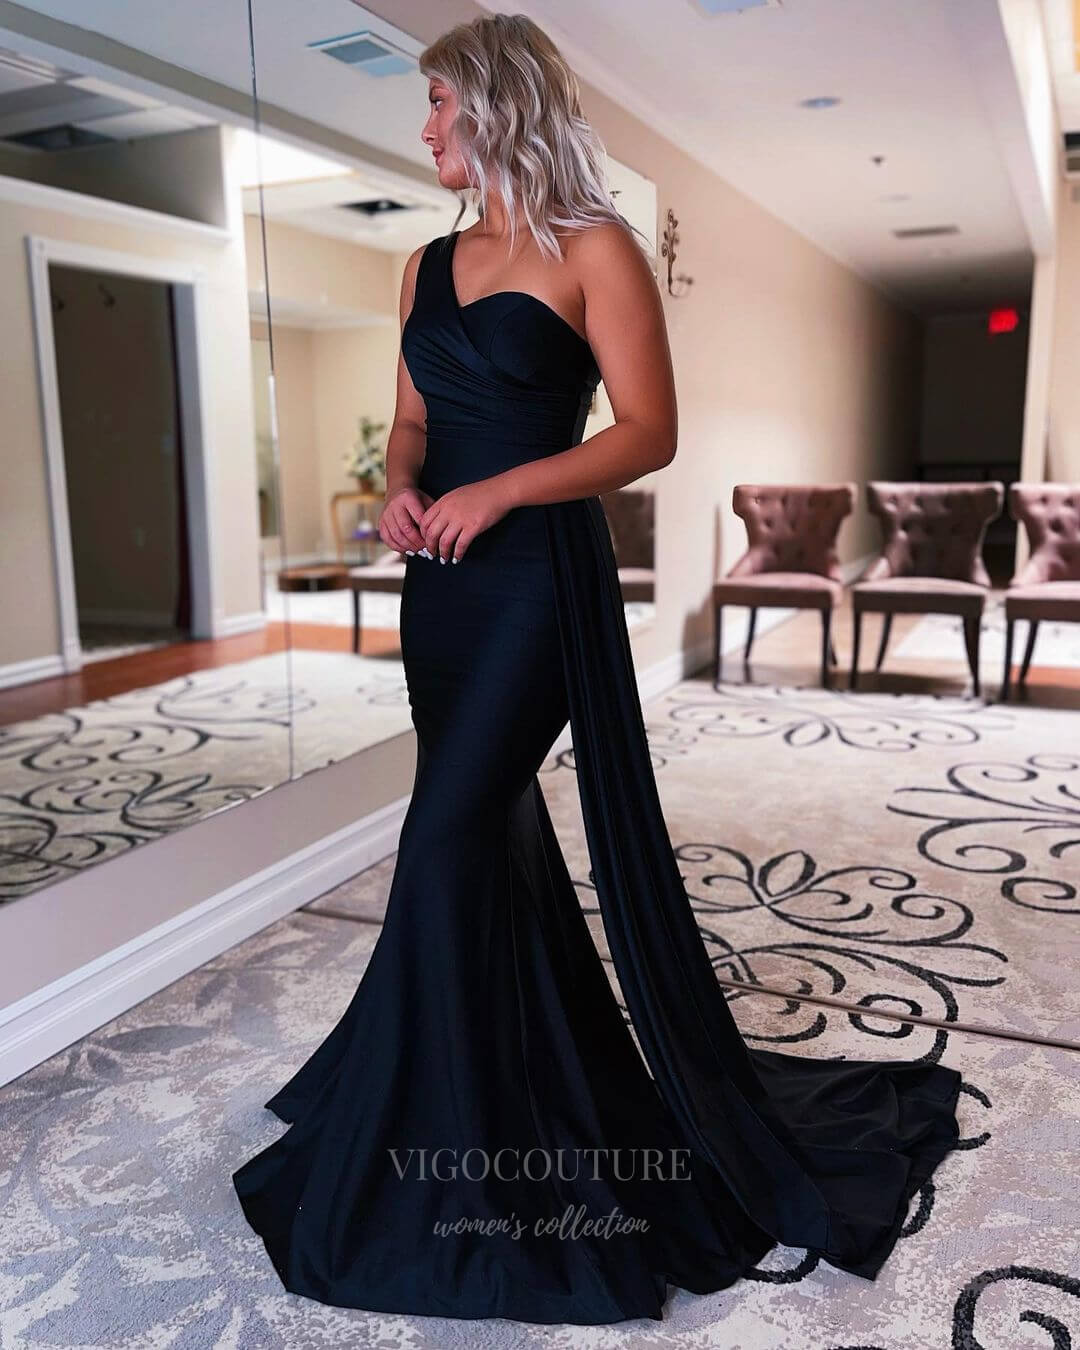 vigocouture-Stretchy Satin Mermaid One Shoulder Prom Dress 20834-Prom Dresses-vigocouture-Navy Blue-US2-